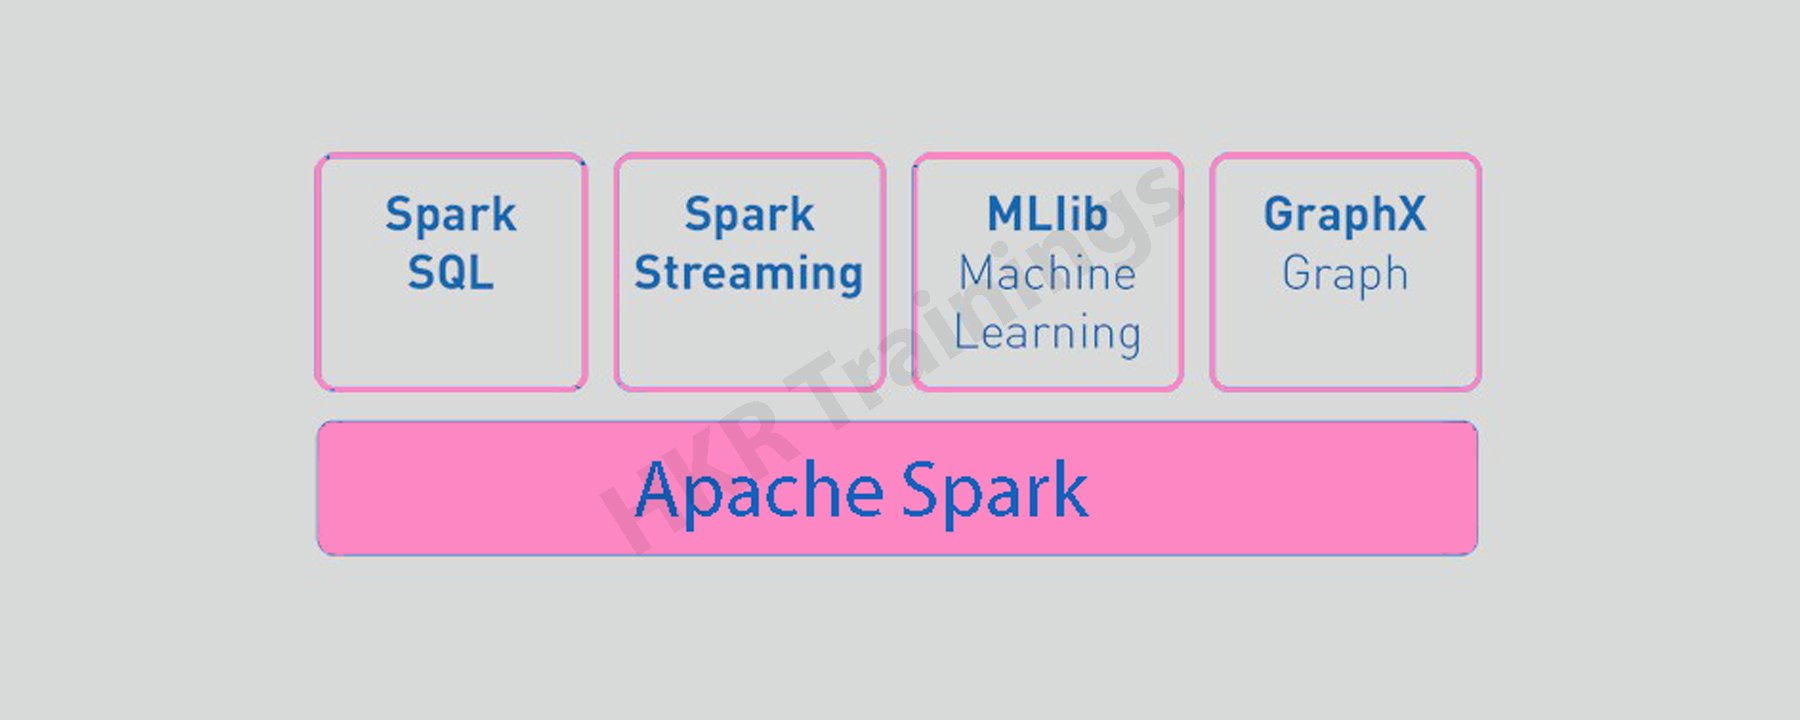 Architecture of Apache Spark